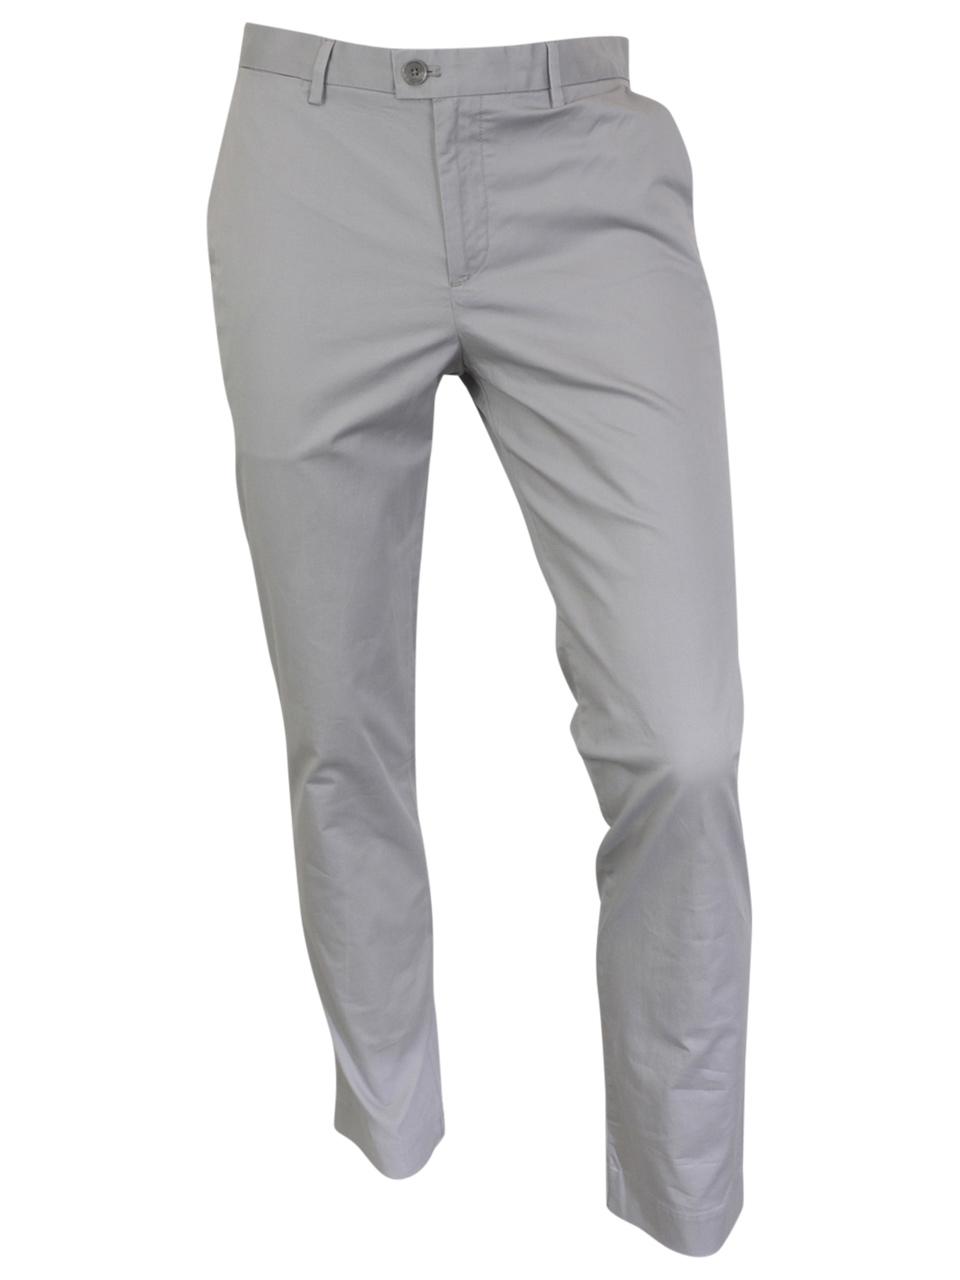 Calvin Klein Men\'s Stretch Pants Chino Slim Fit | eBay Solid